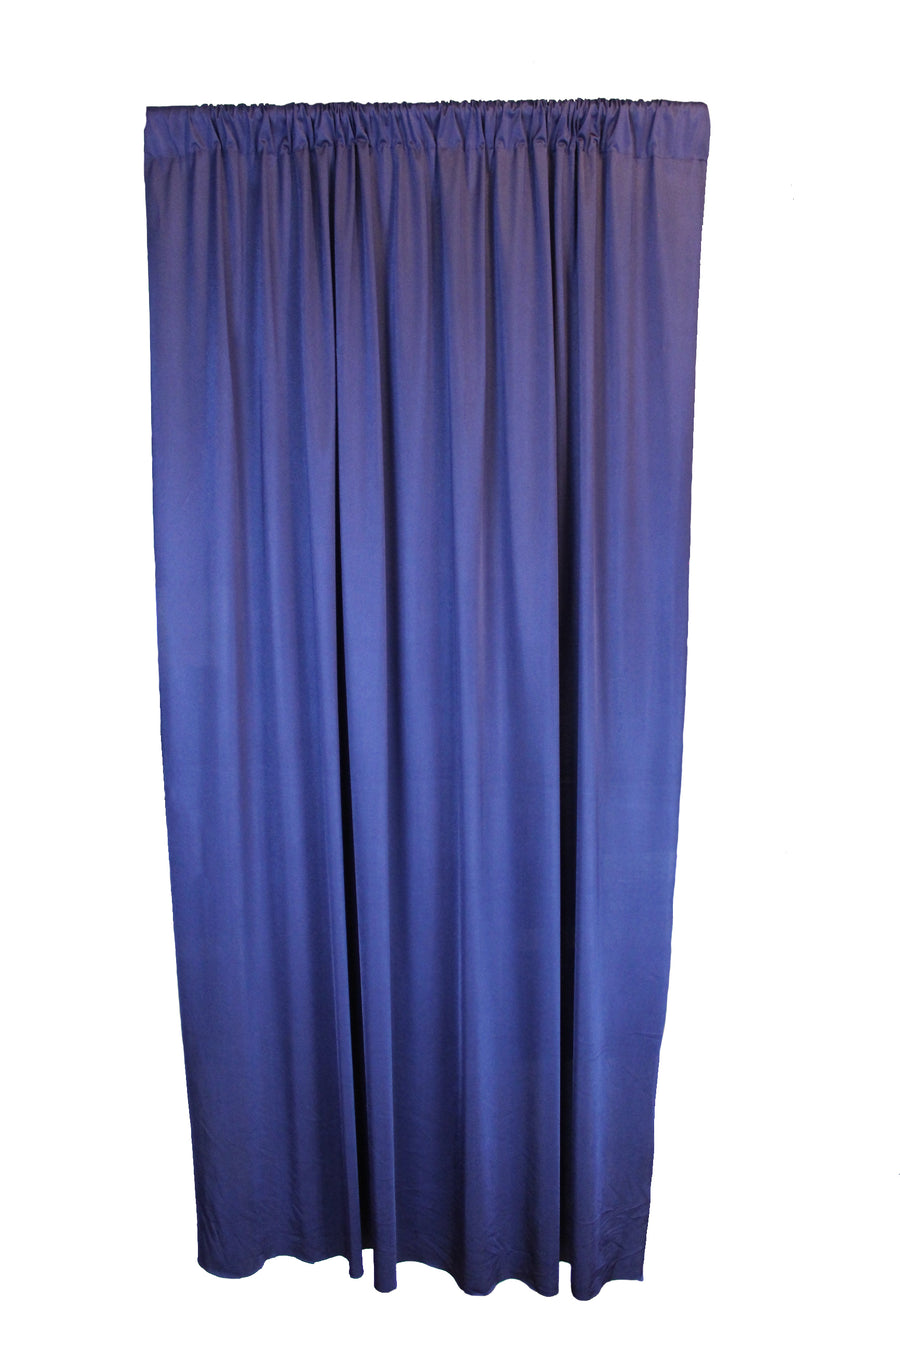 Classic Blue Velveteen Curtain